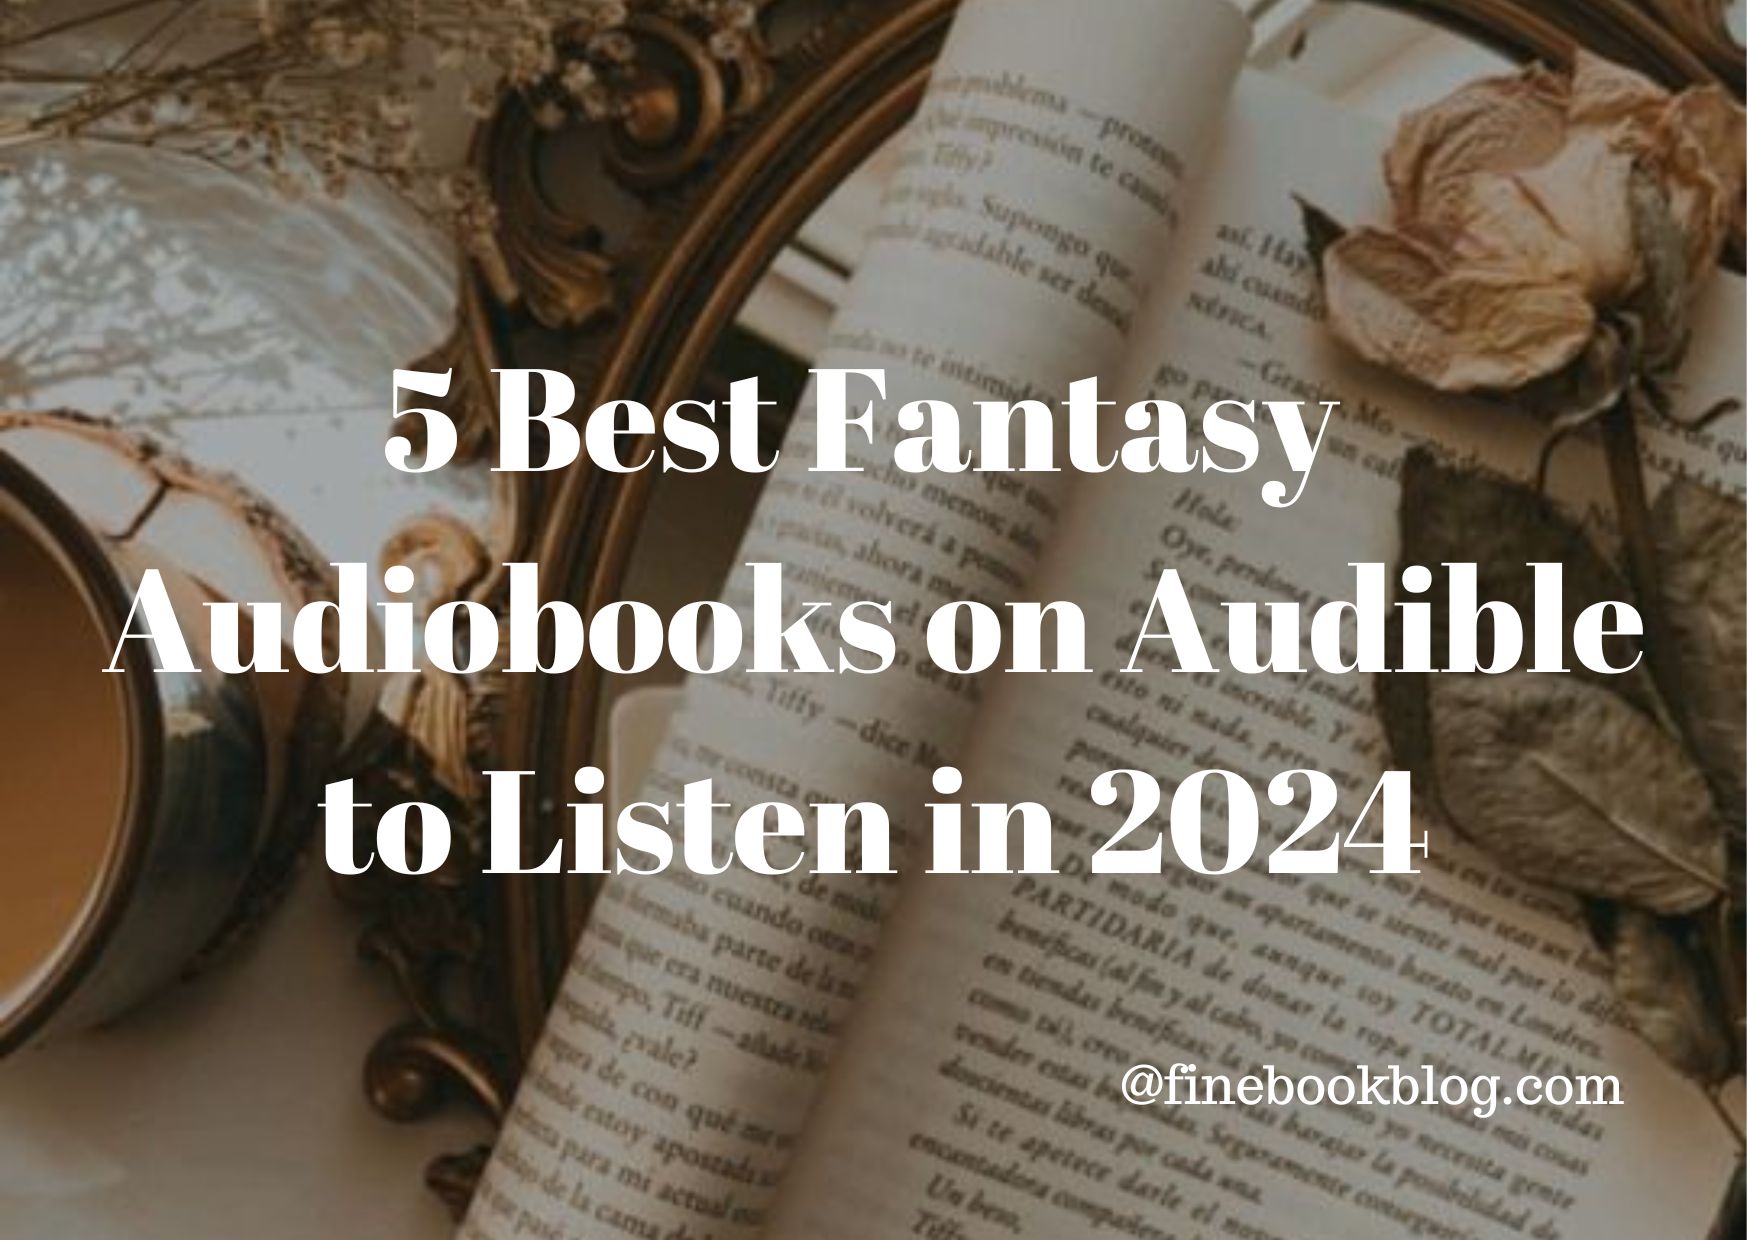 5-bestselling-fantasy-audiobooks-on-amazon-audible